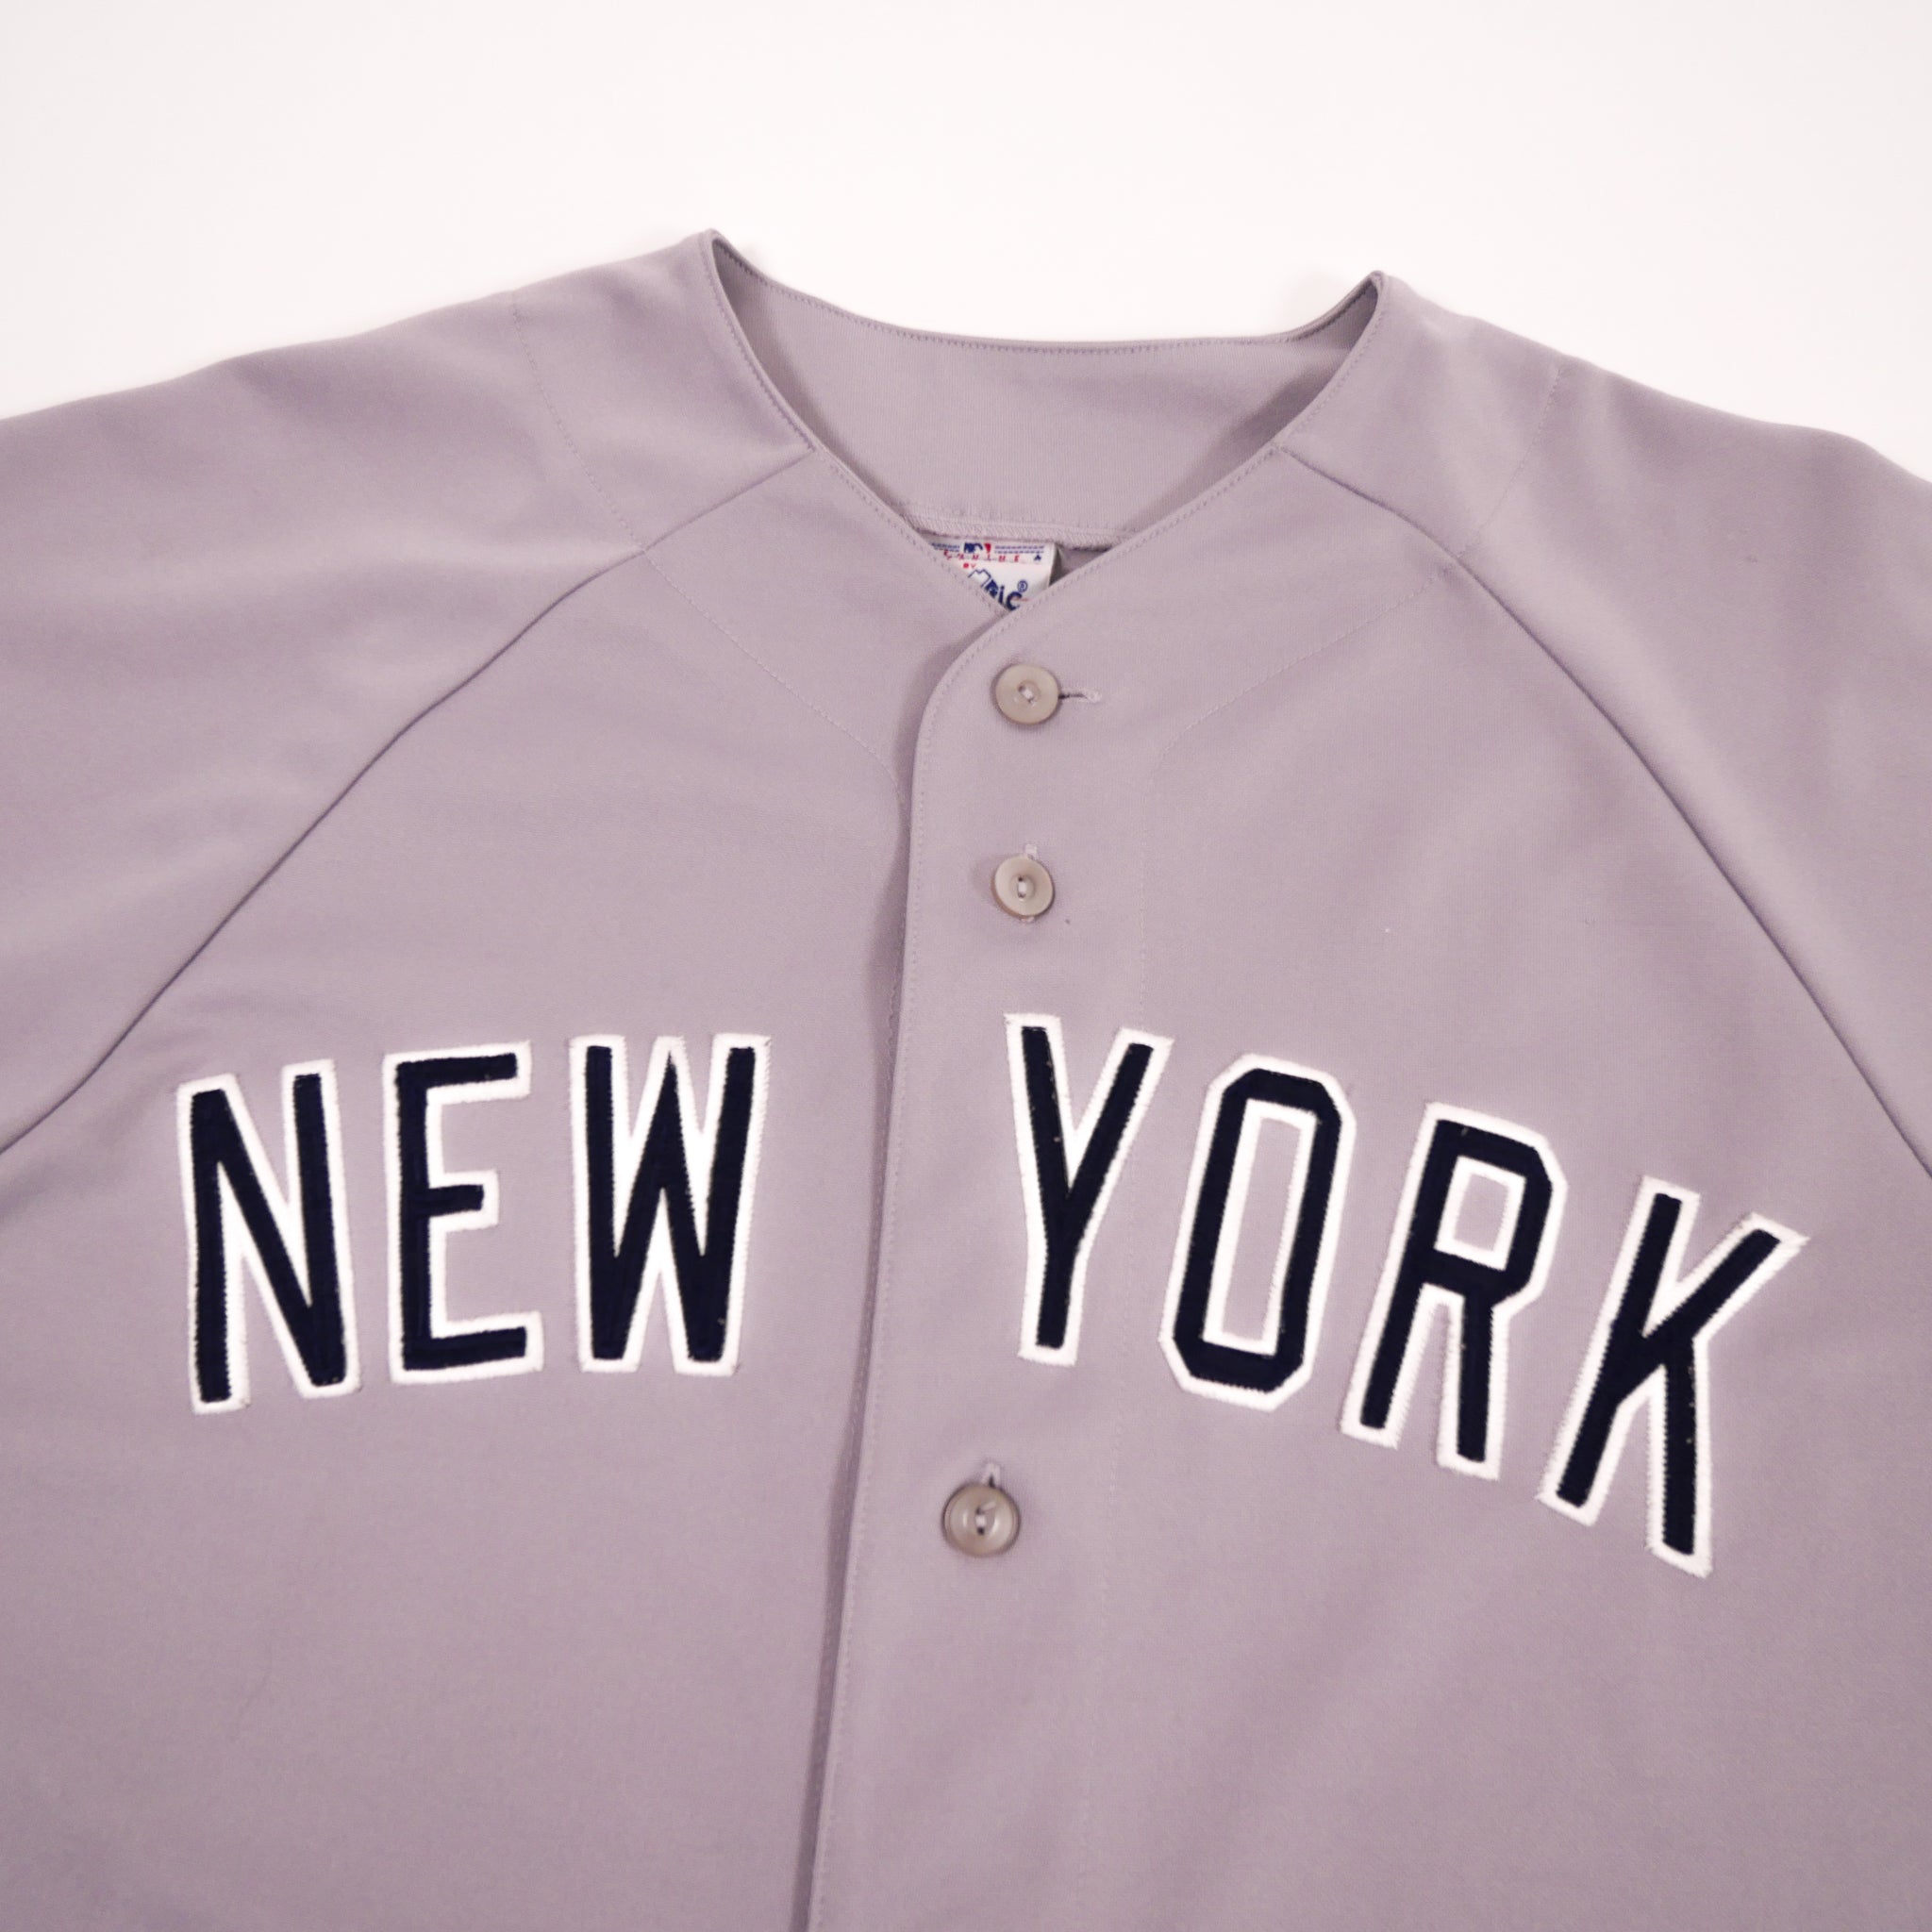 MLB New York Yankees Button Up Jersey - XL